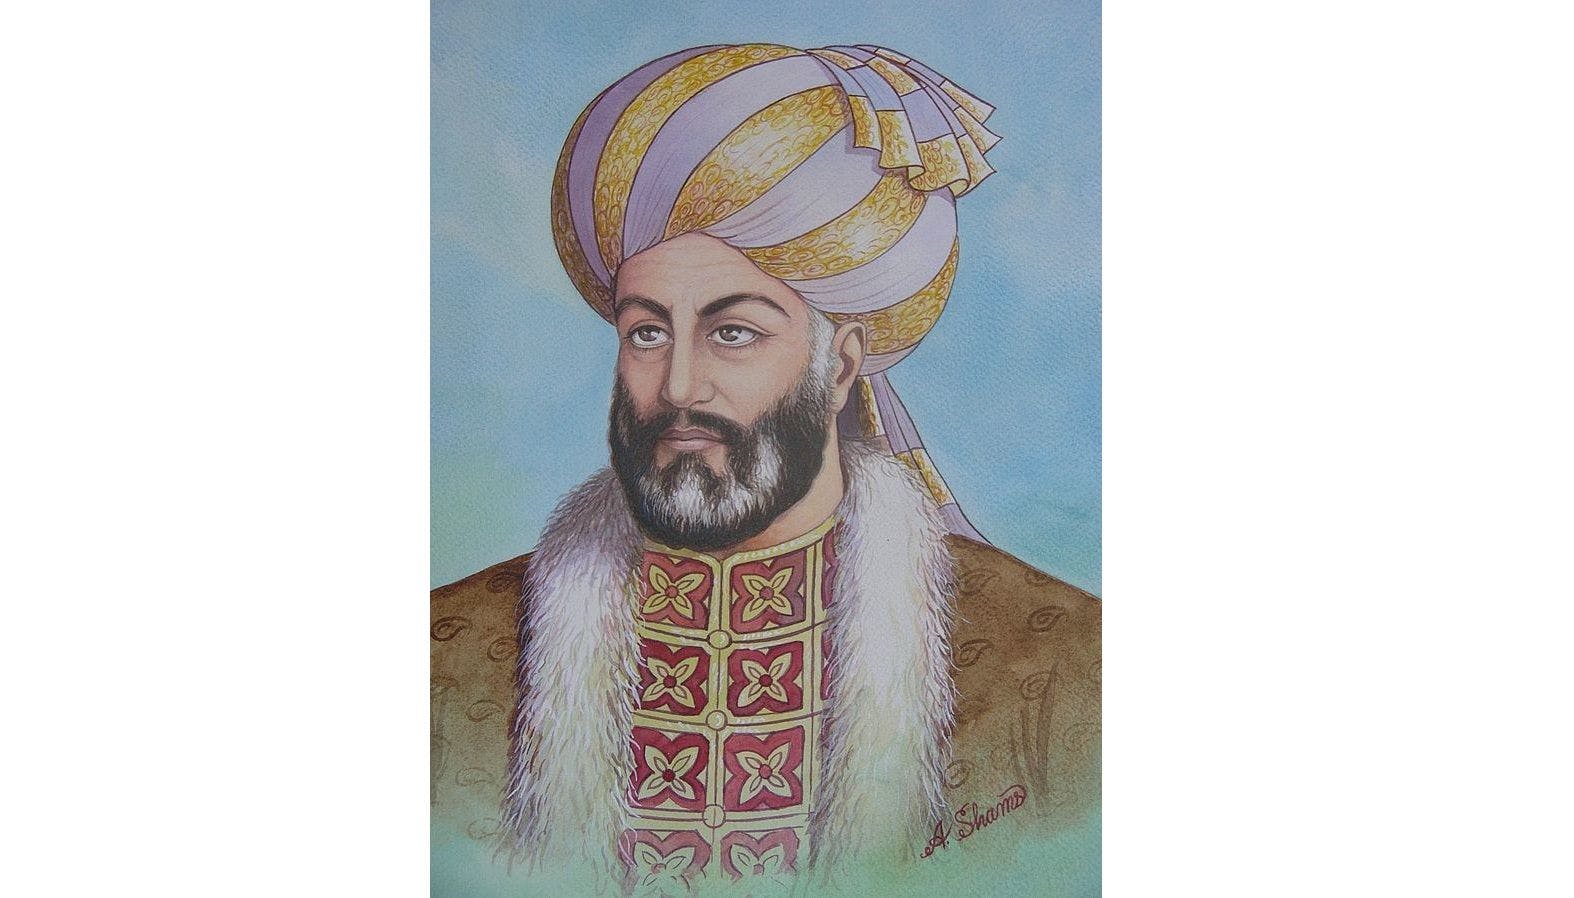 Ahmad Shah Abdali